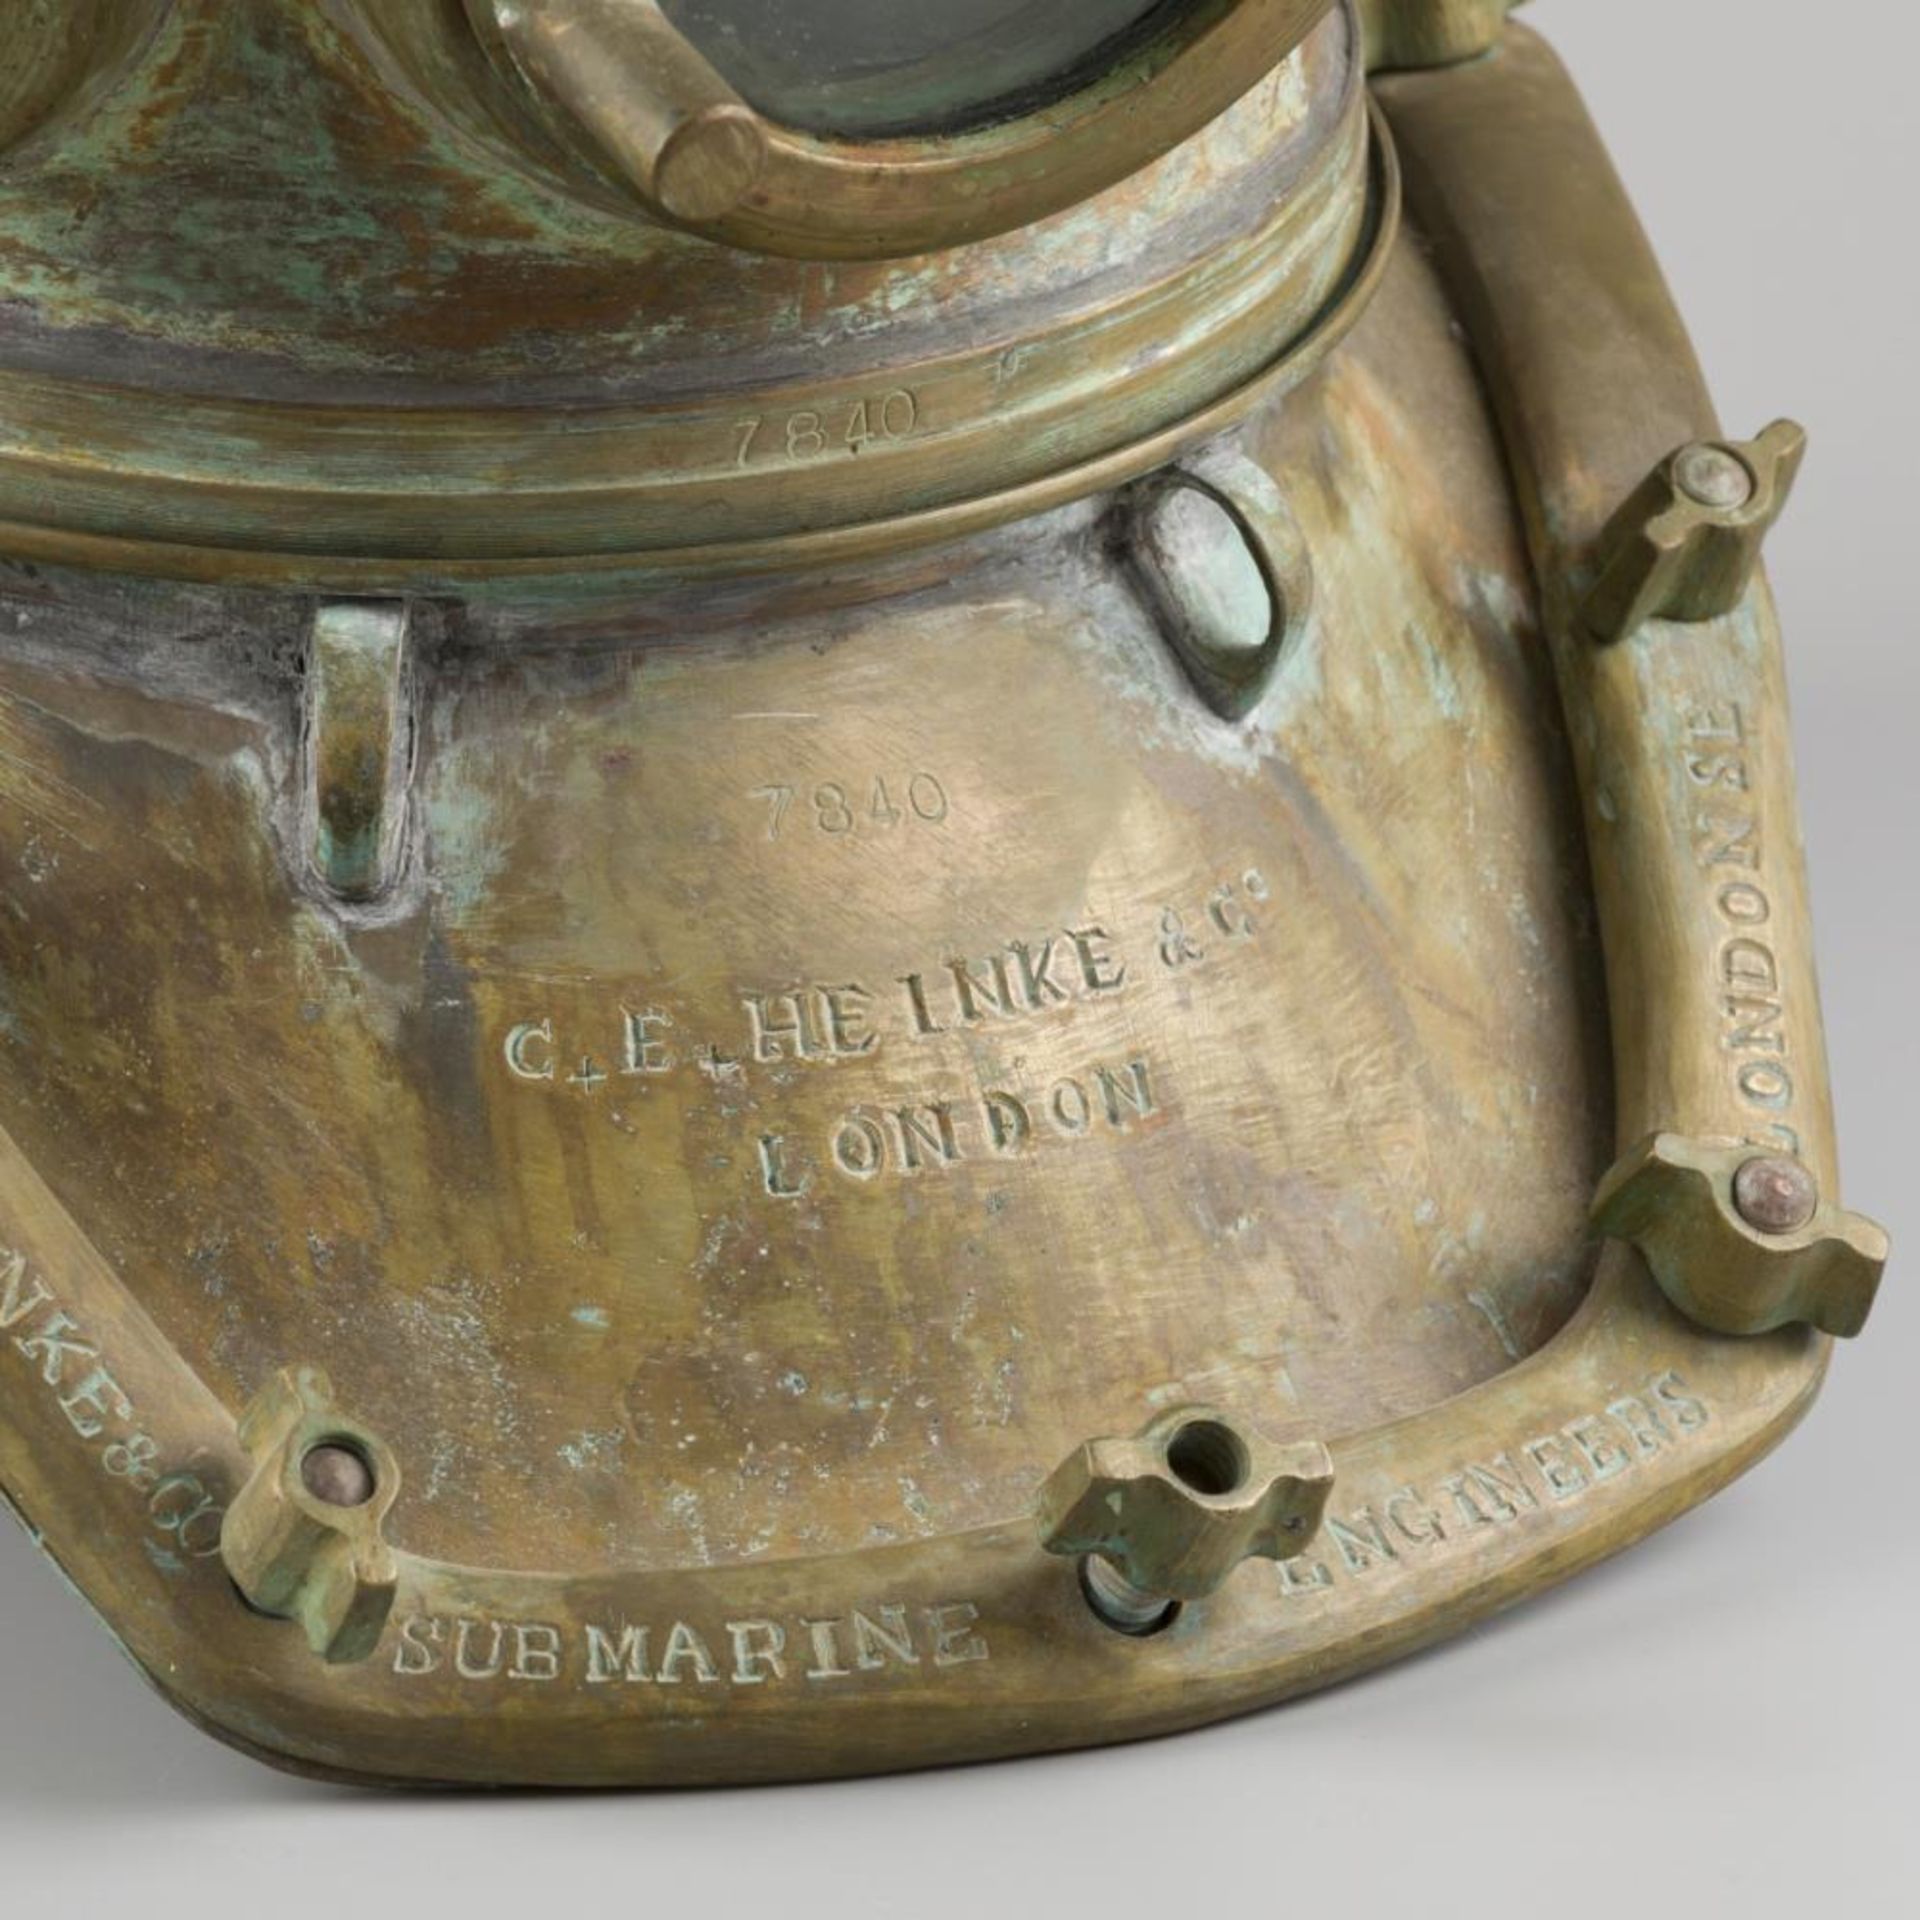 A 12-bolt brass diving helmet by C.E. HEINKE & Co. LTD, London, ca. 1930. - Image 3 of 3